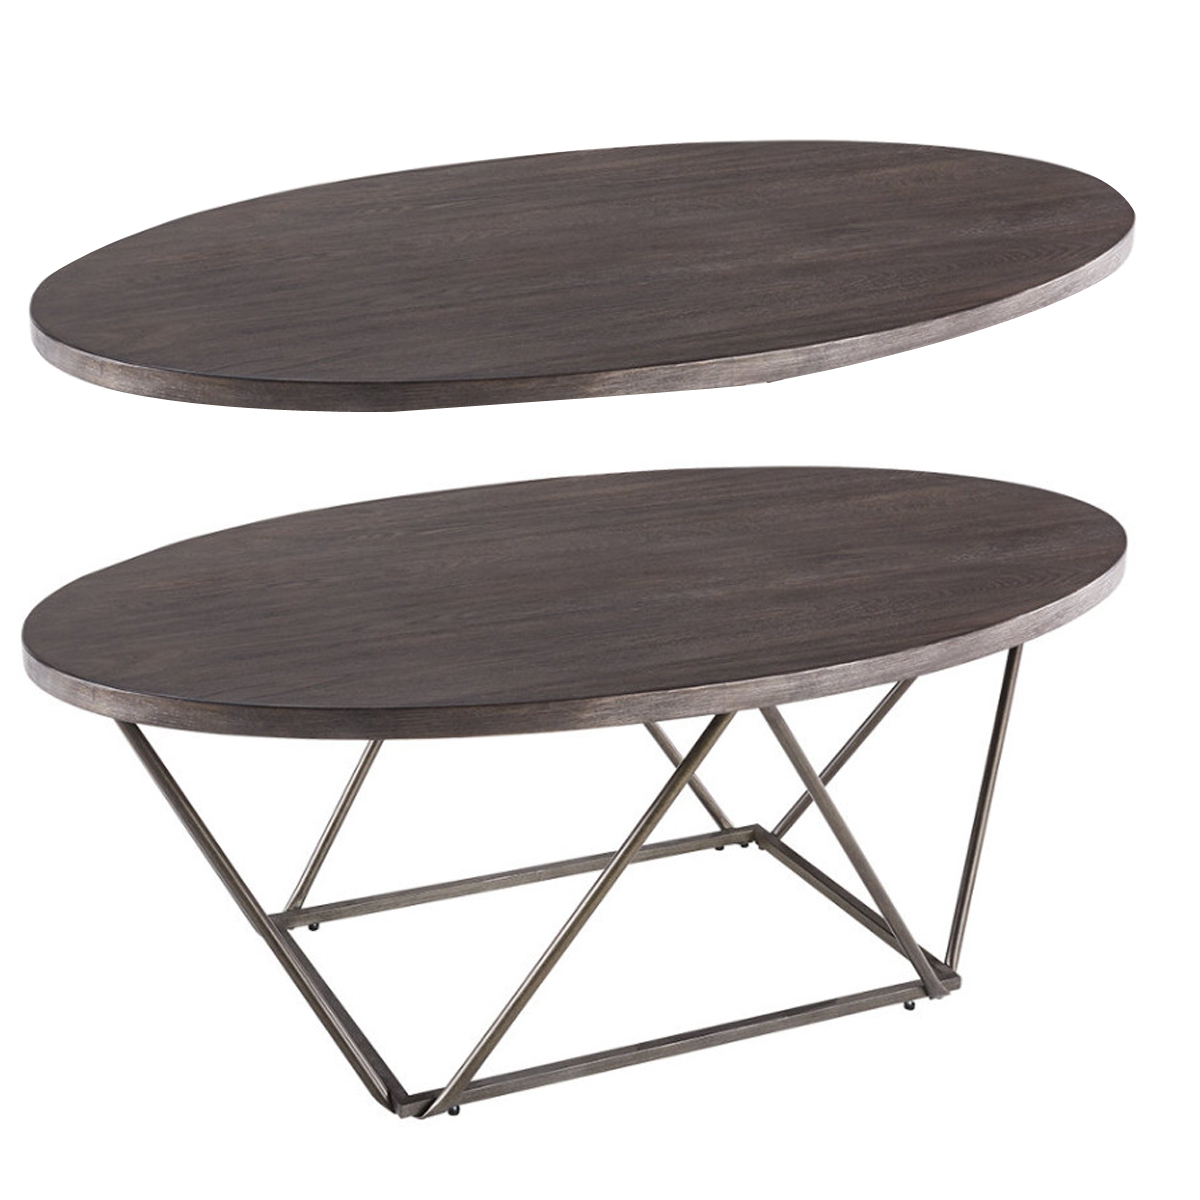 Elm Wood Table Set With Bridge Truss Metal Base, Set Of Three, Brown And Gray- Saltoro Sherpi